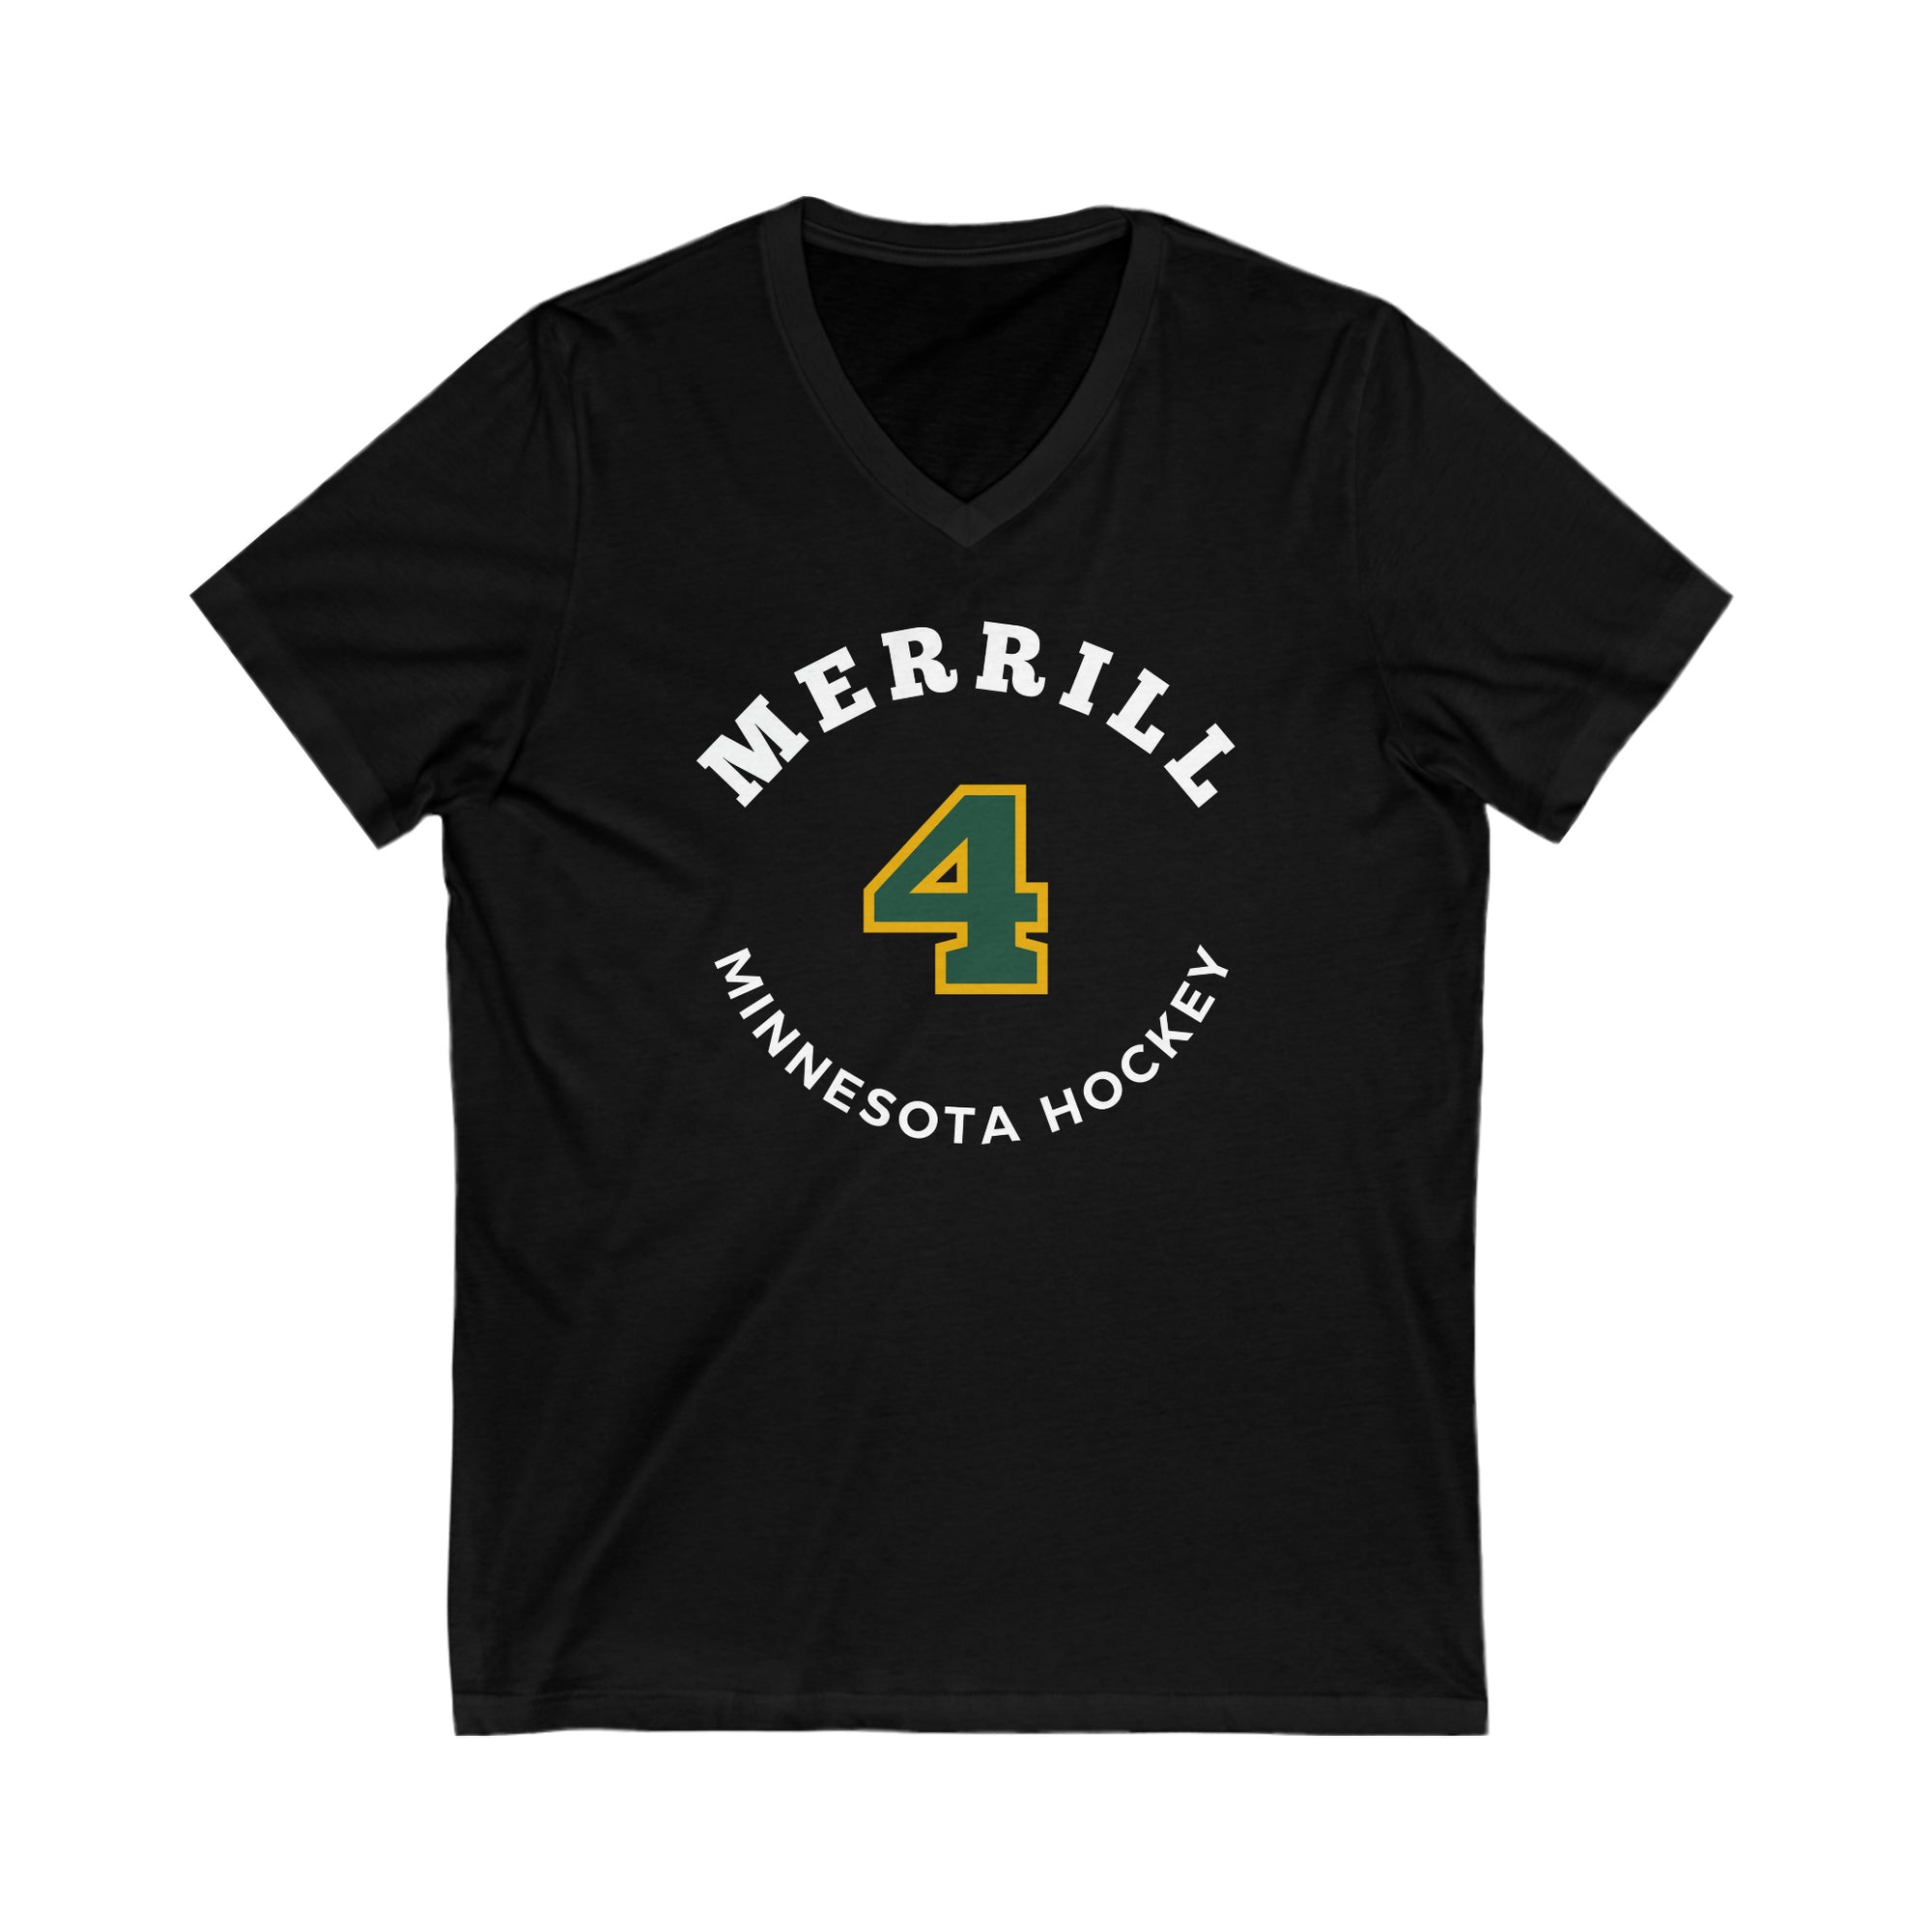 Merrill 4 Minnesota Hockey Number Arch Design Unisex V-Neck Tee